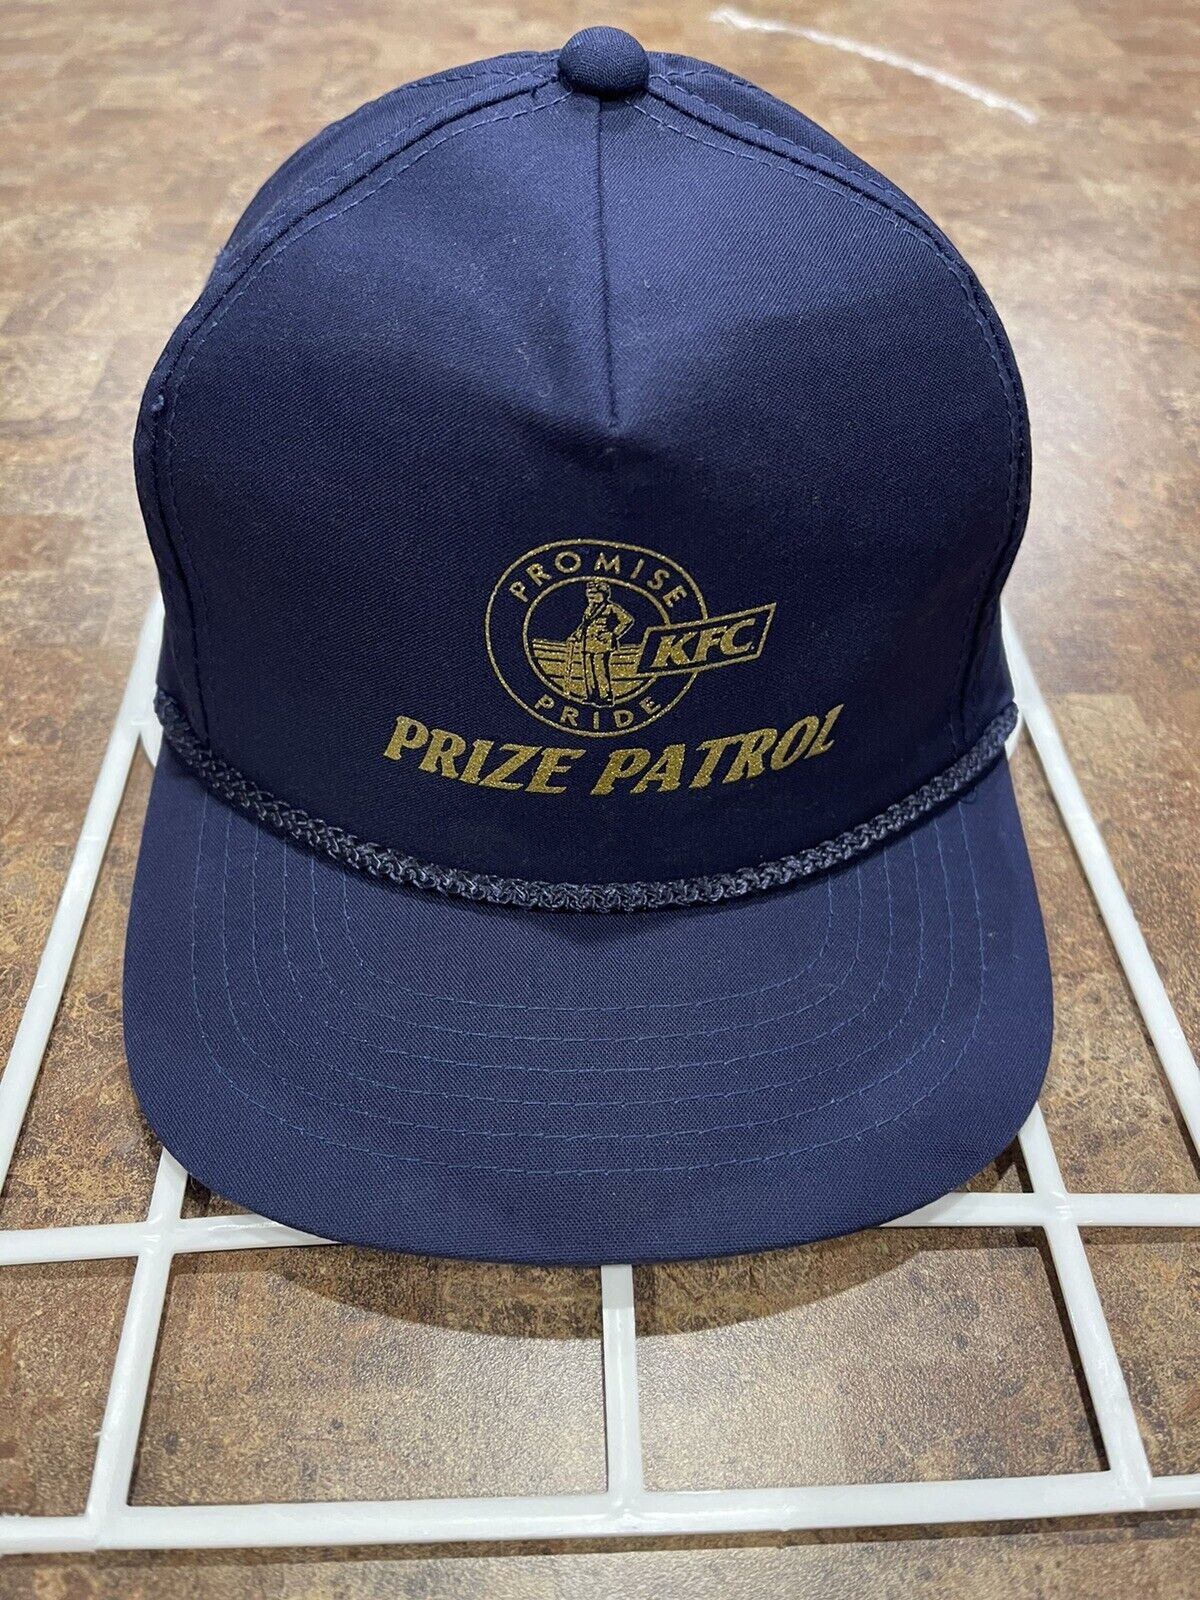 Vintage KFC Prize Patrol SnapBack Trucker Hat Cap Navy YoungAn Promise Pride